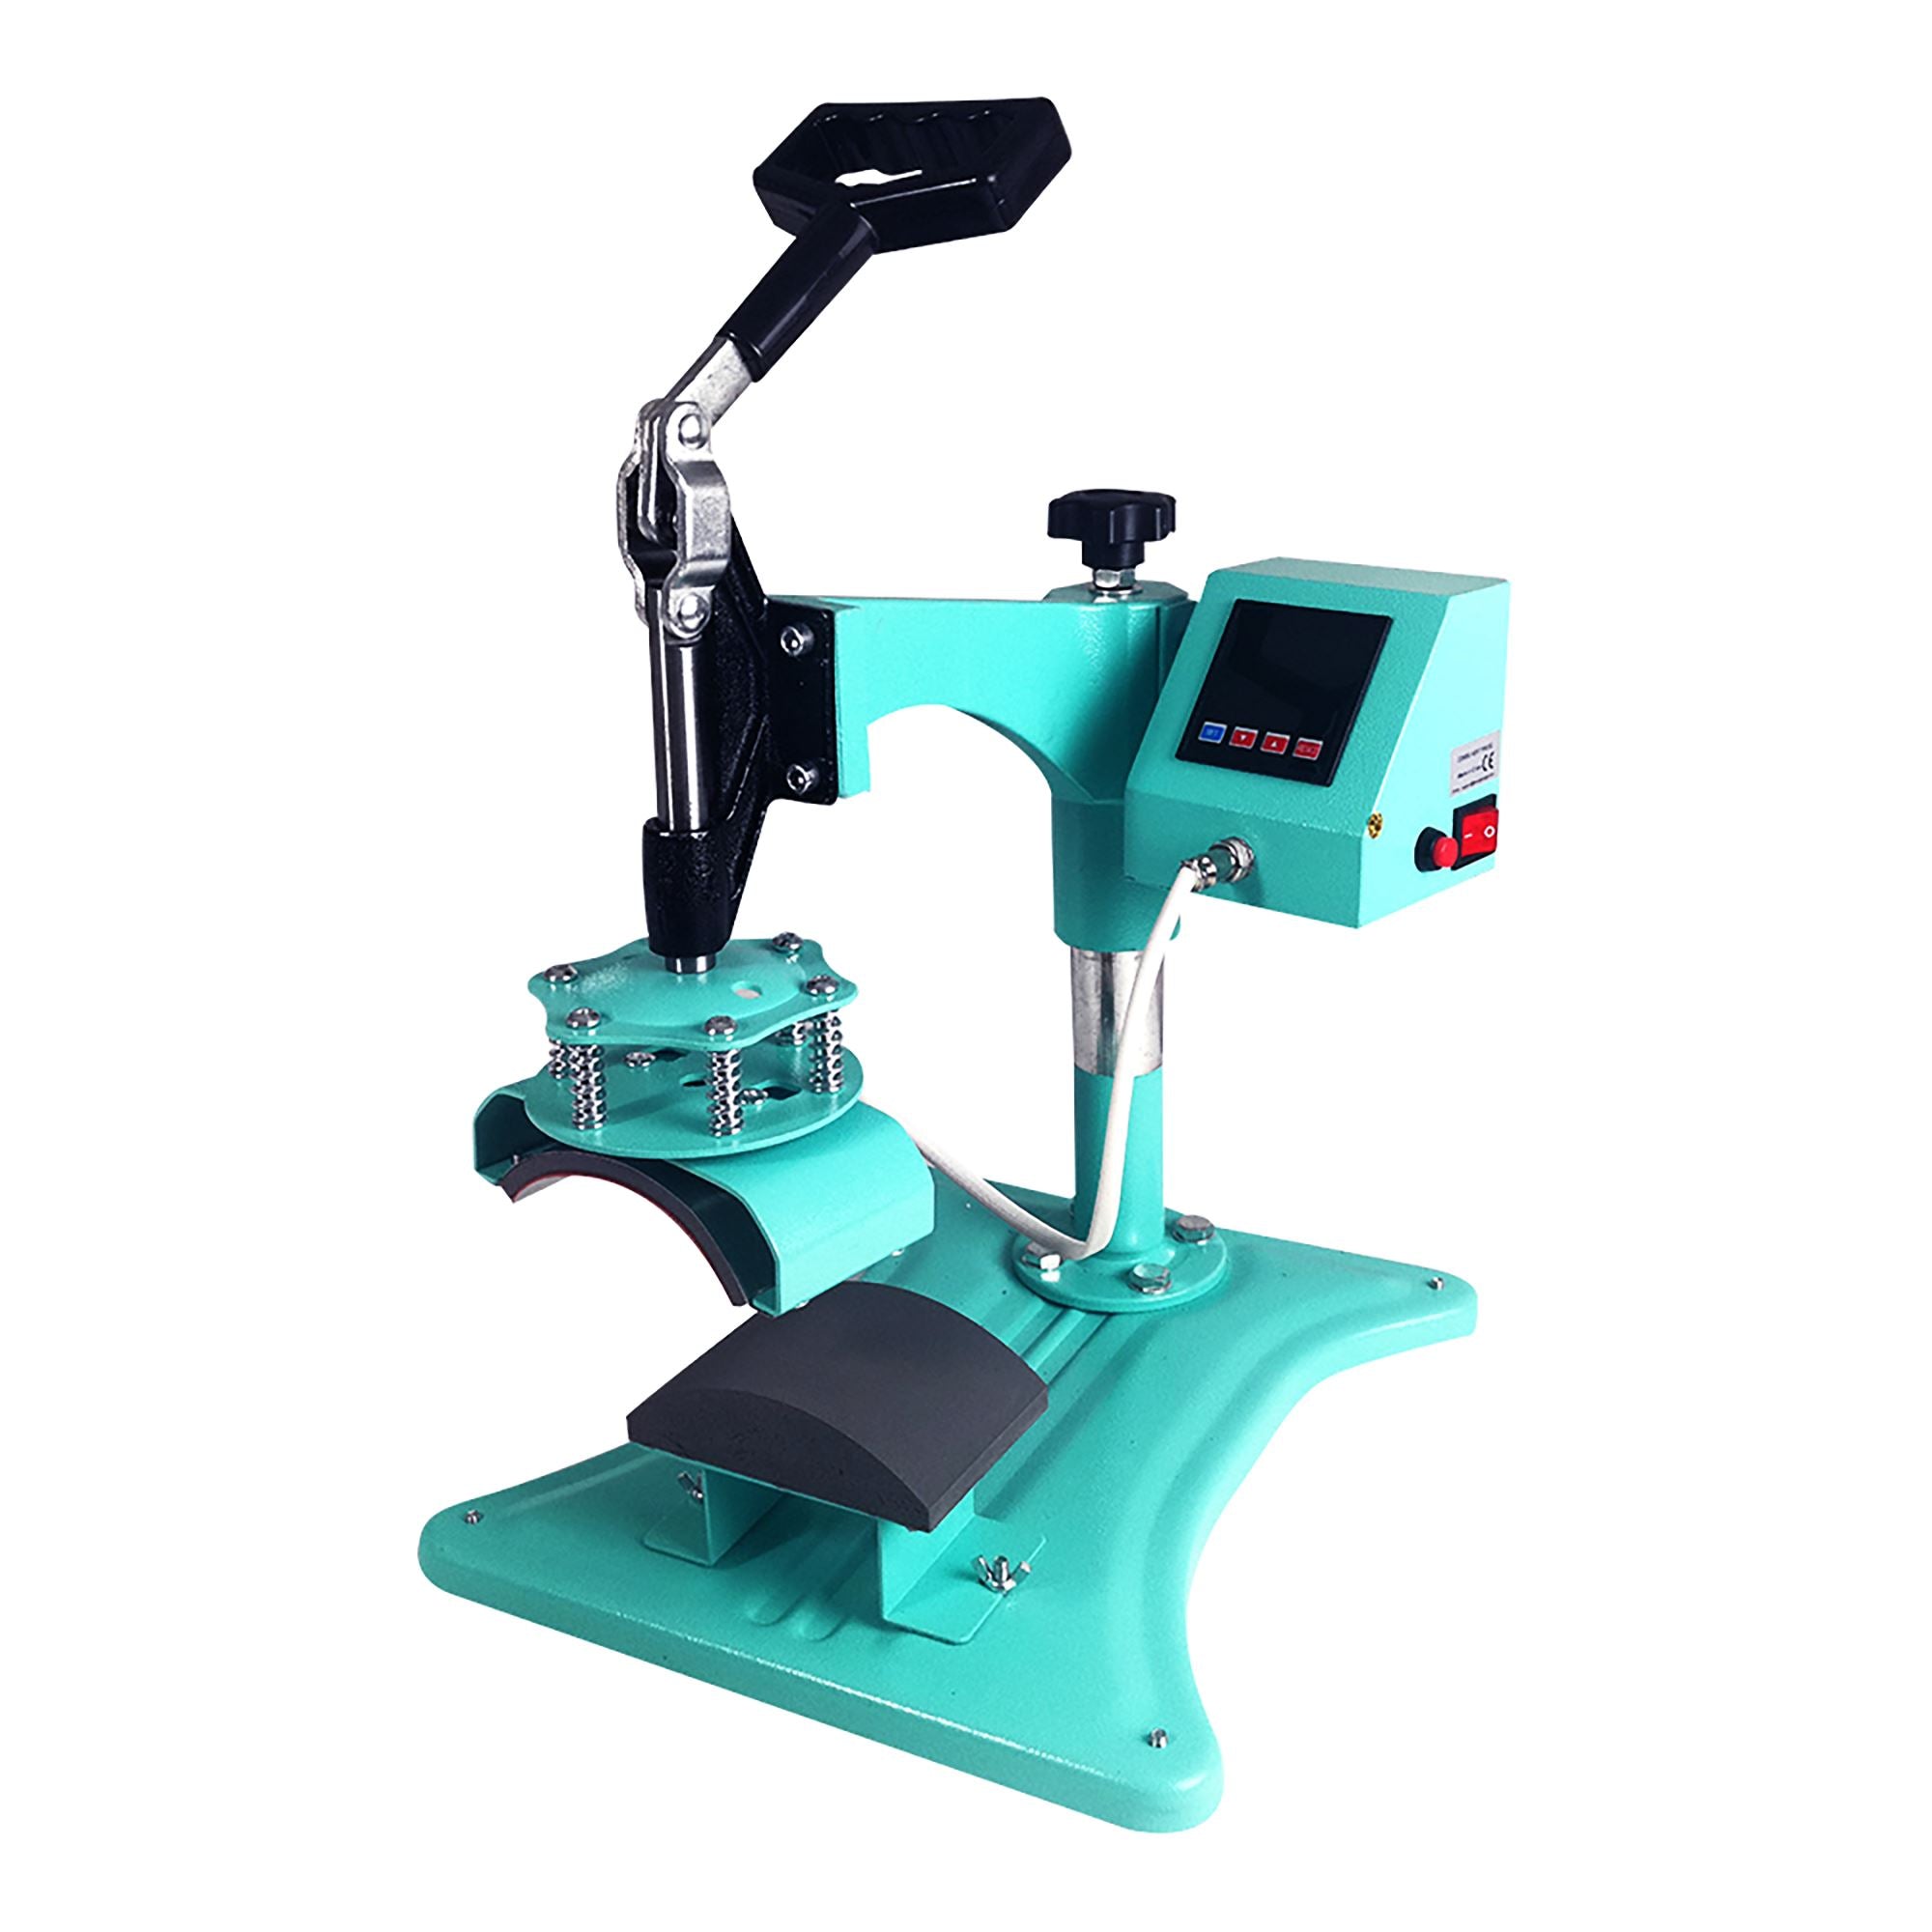 360 Digital Heat Press and Accessories Craft Machine for T Shirt